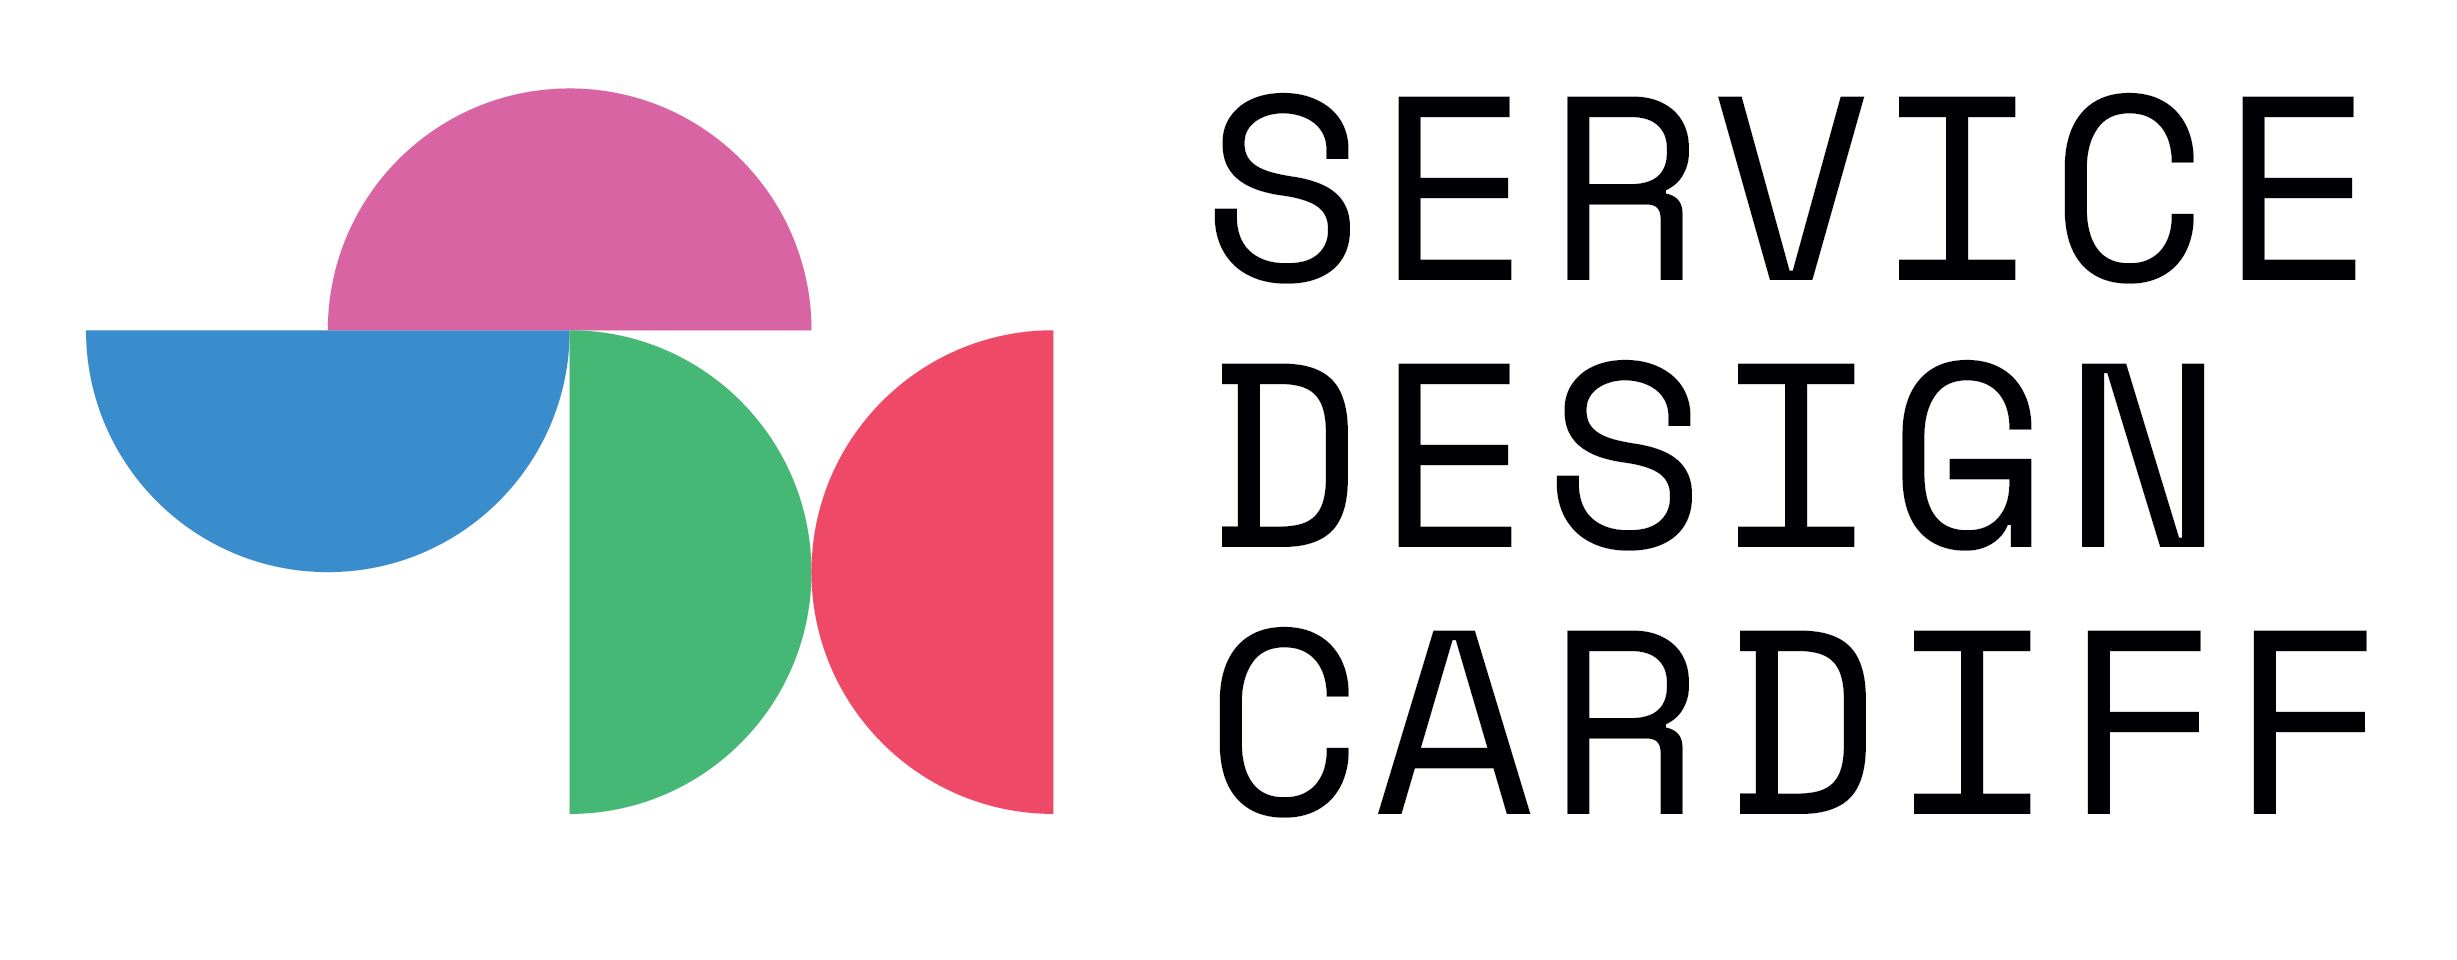 Cardiff Service Design Community